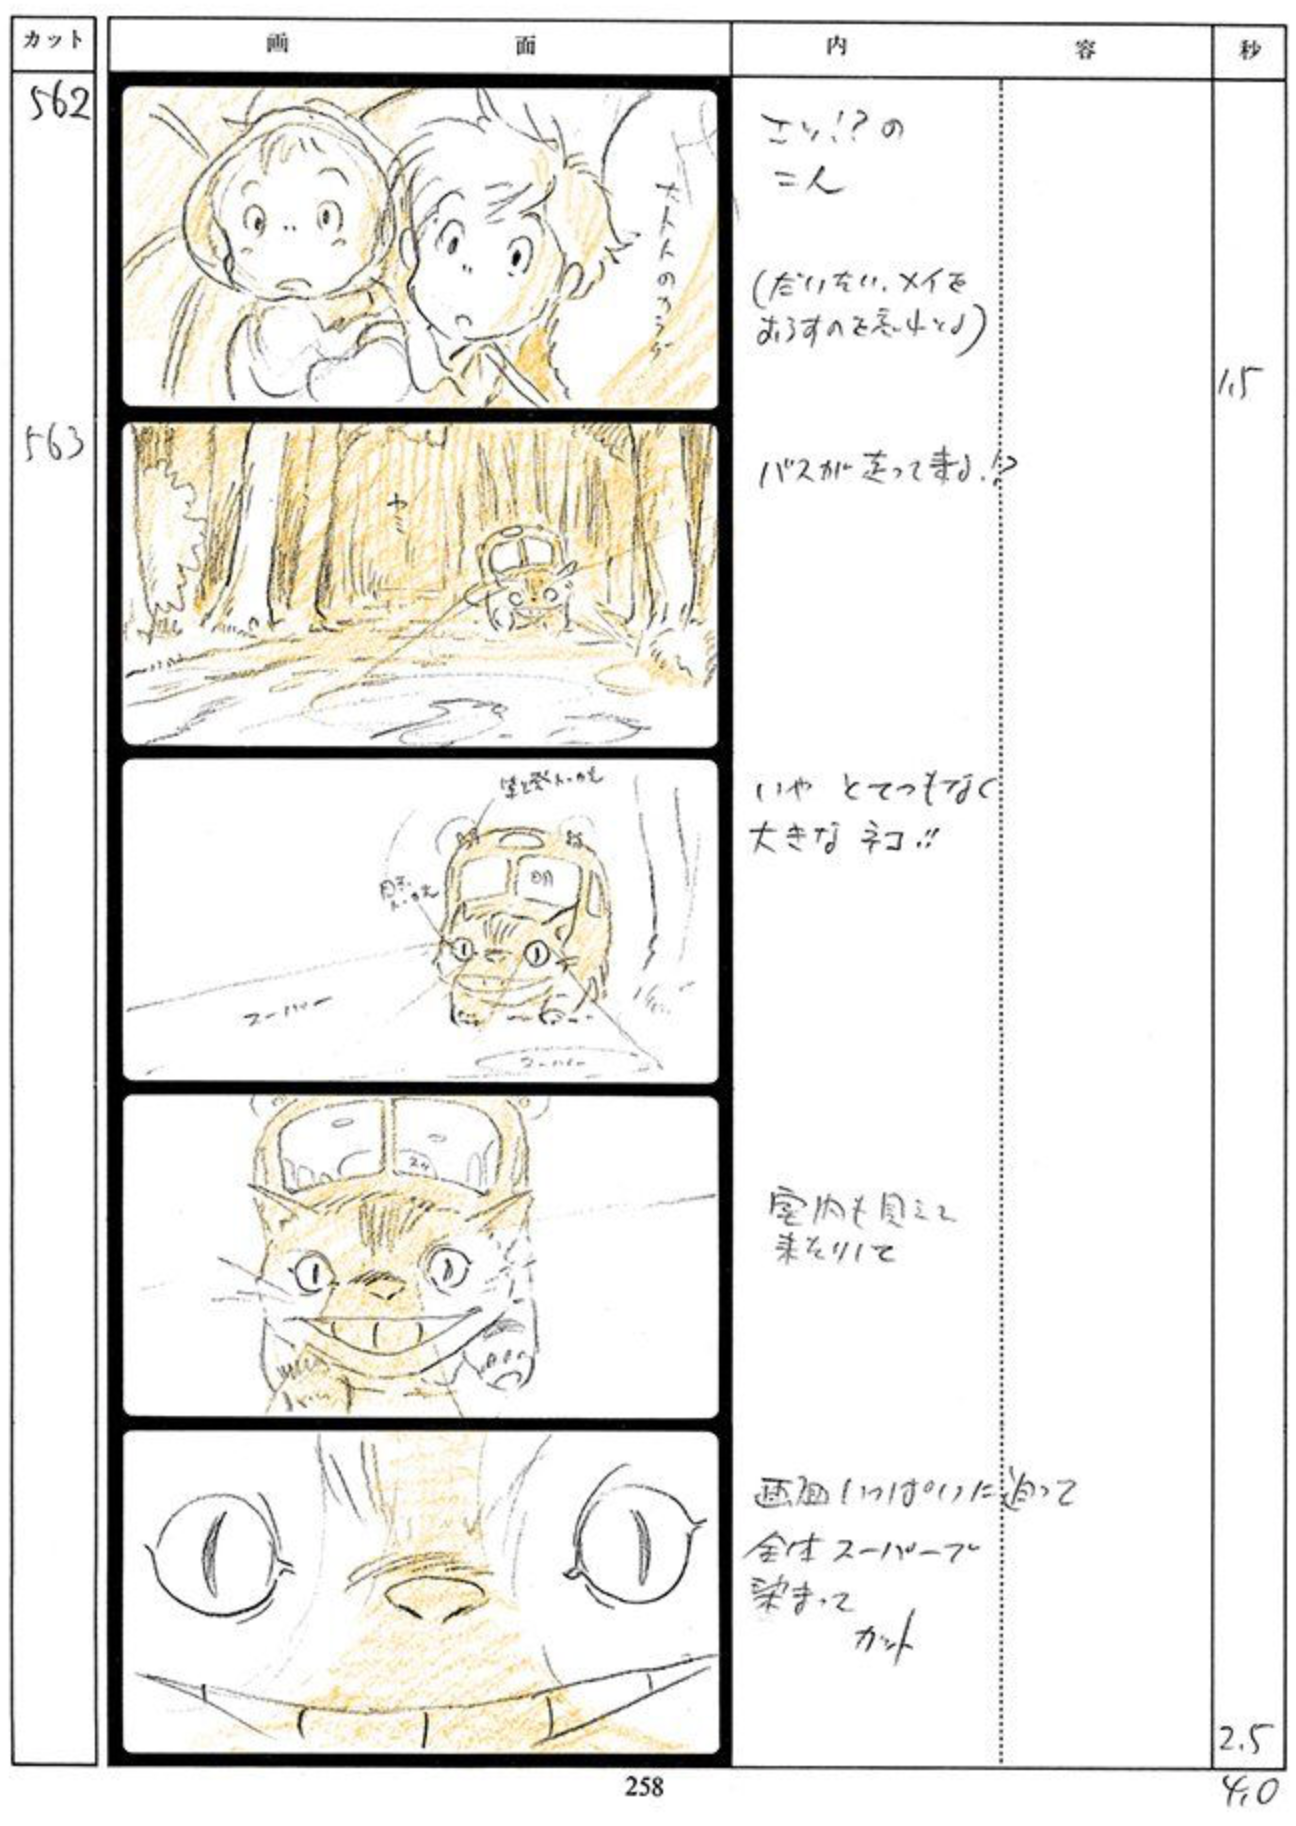 A4 Storyboard Totoro